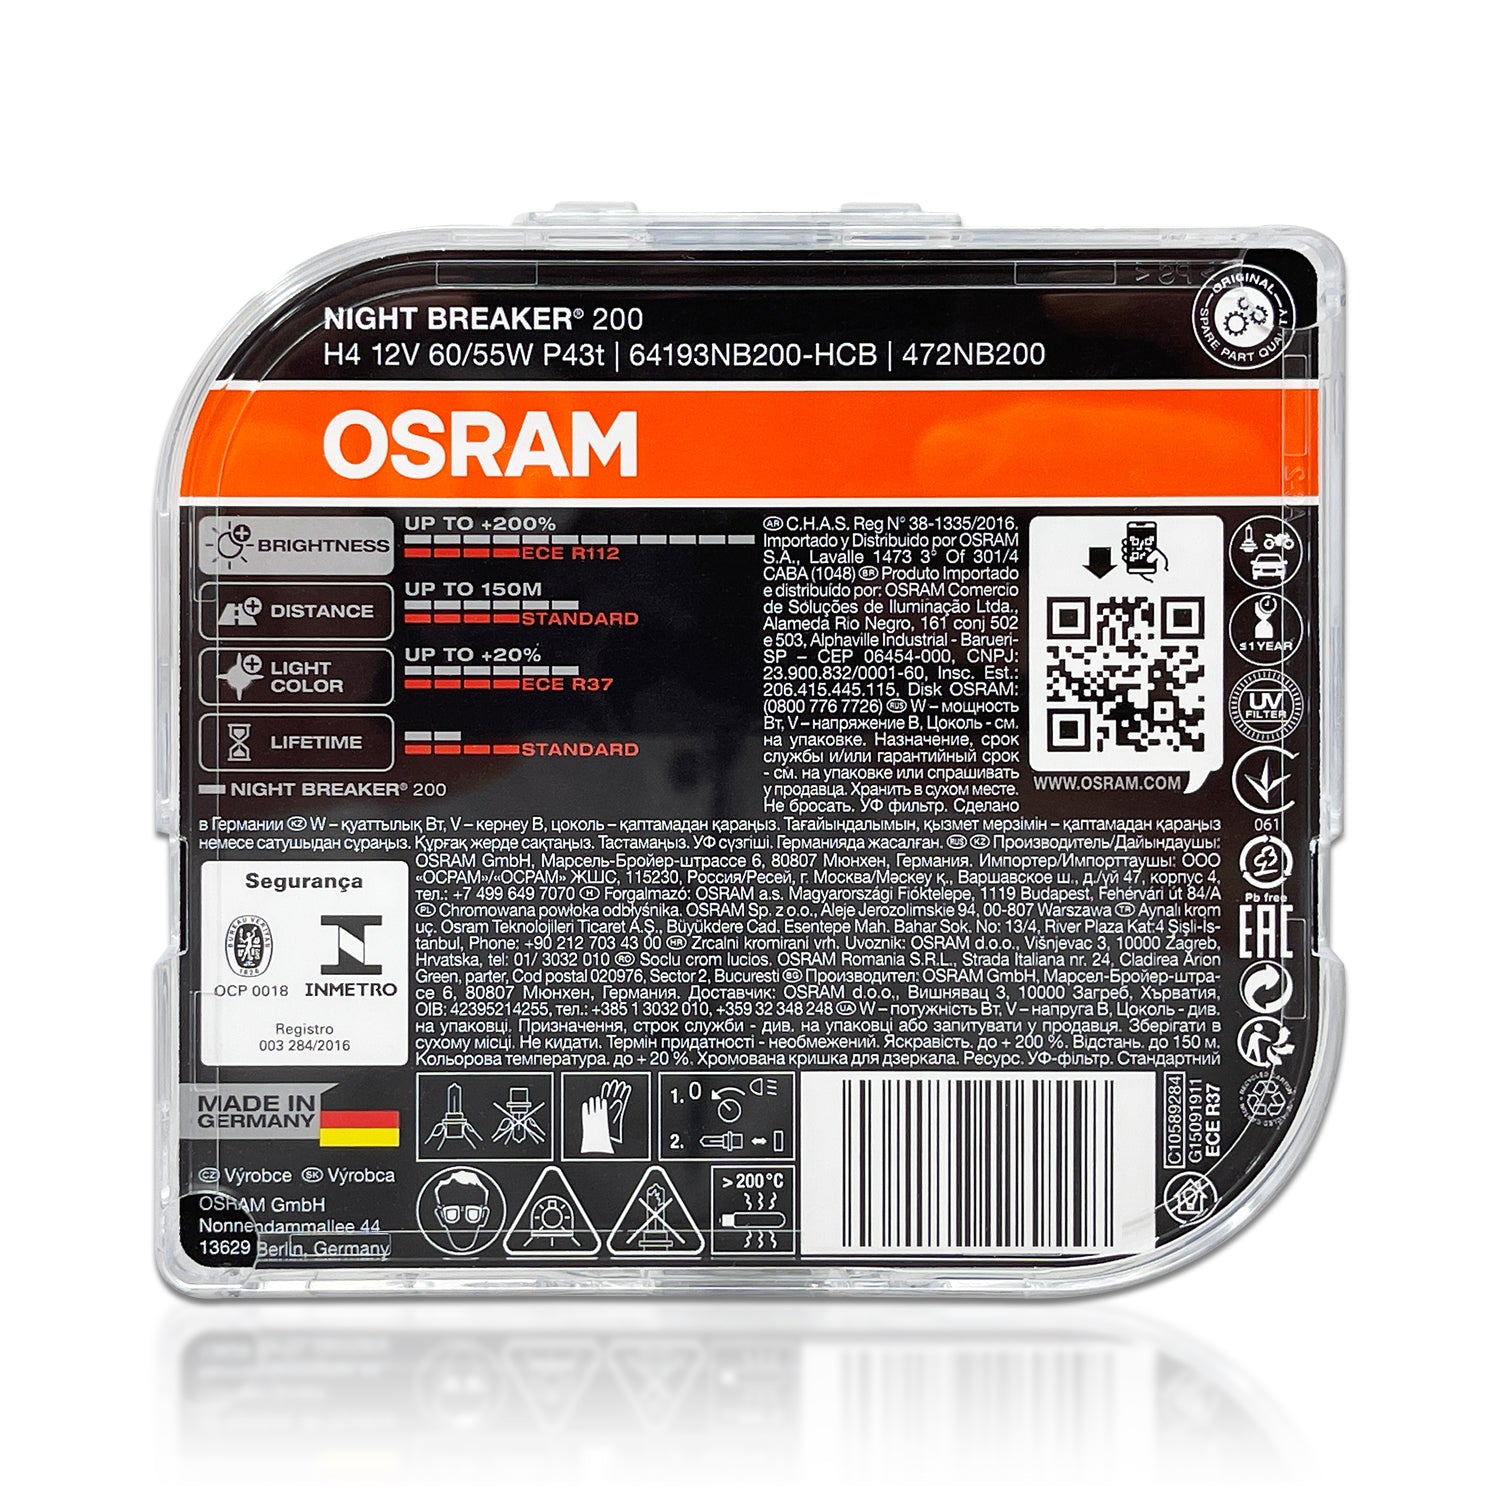 OSRAM H4 H7 H11 Night Breaker 200 Halogen Car Headlight New Gen +200%  Bright Original Auto Lamps Made In Germany 9003 HB2, 2pcs